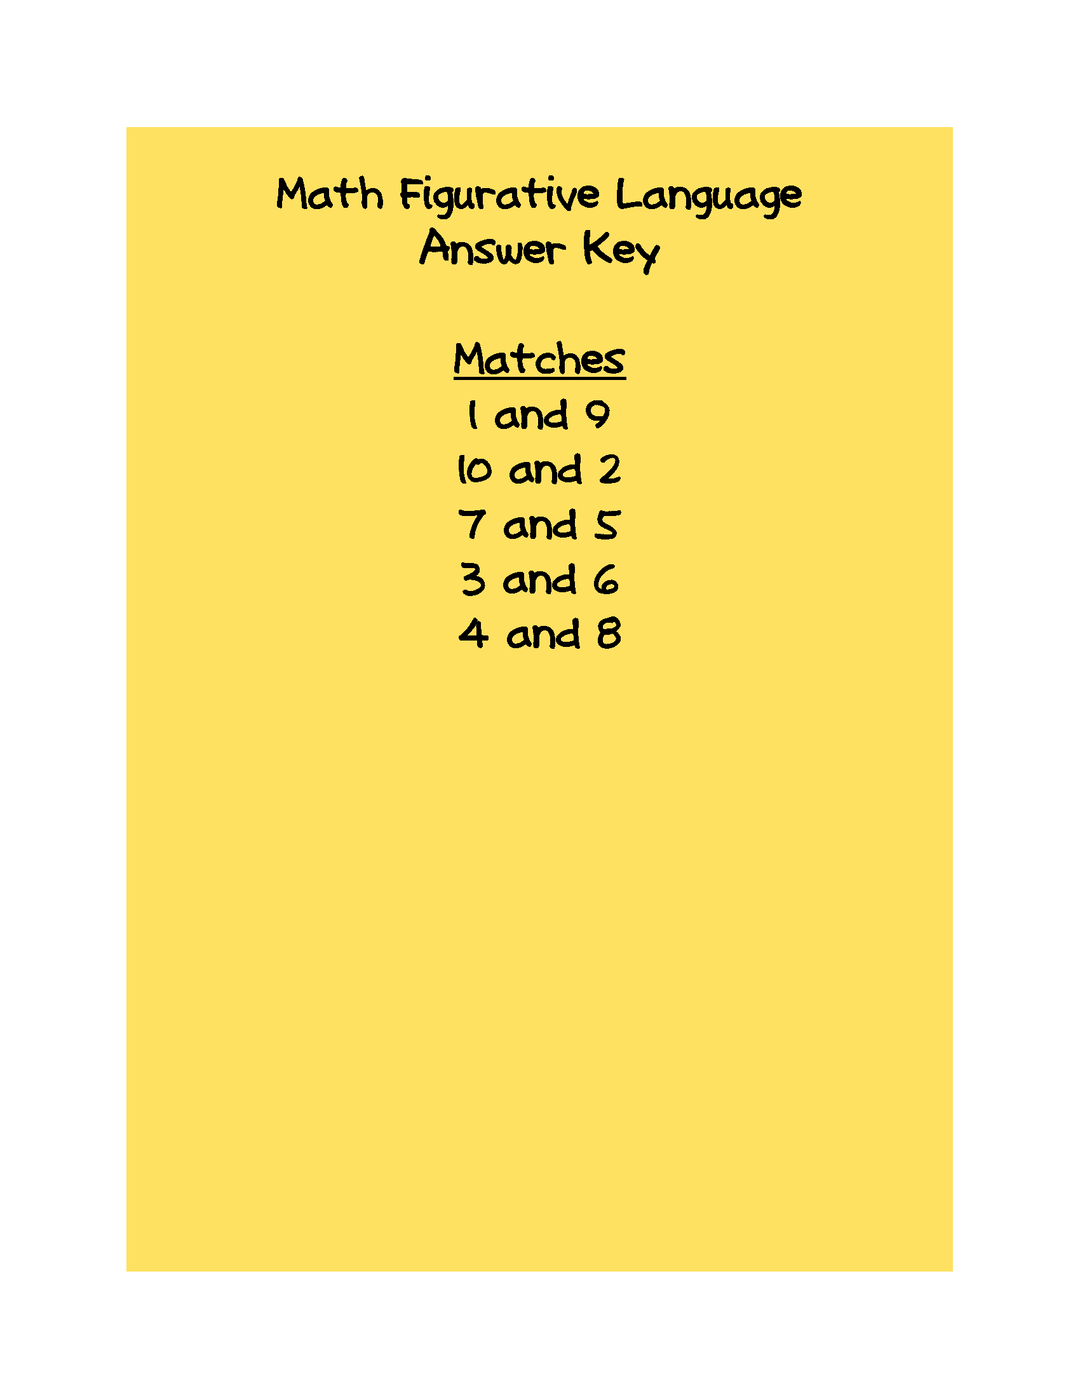 Math Similes & Metaphors Plus Math Figurative Language Game